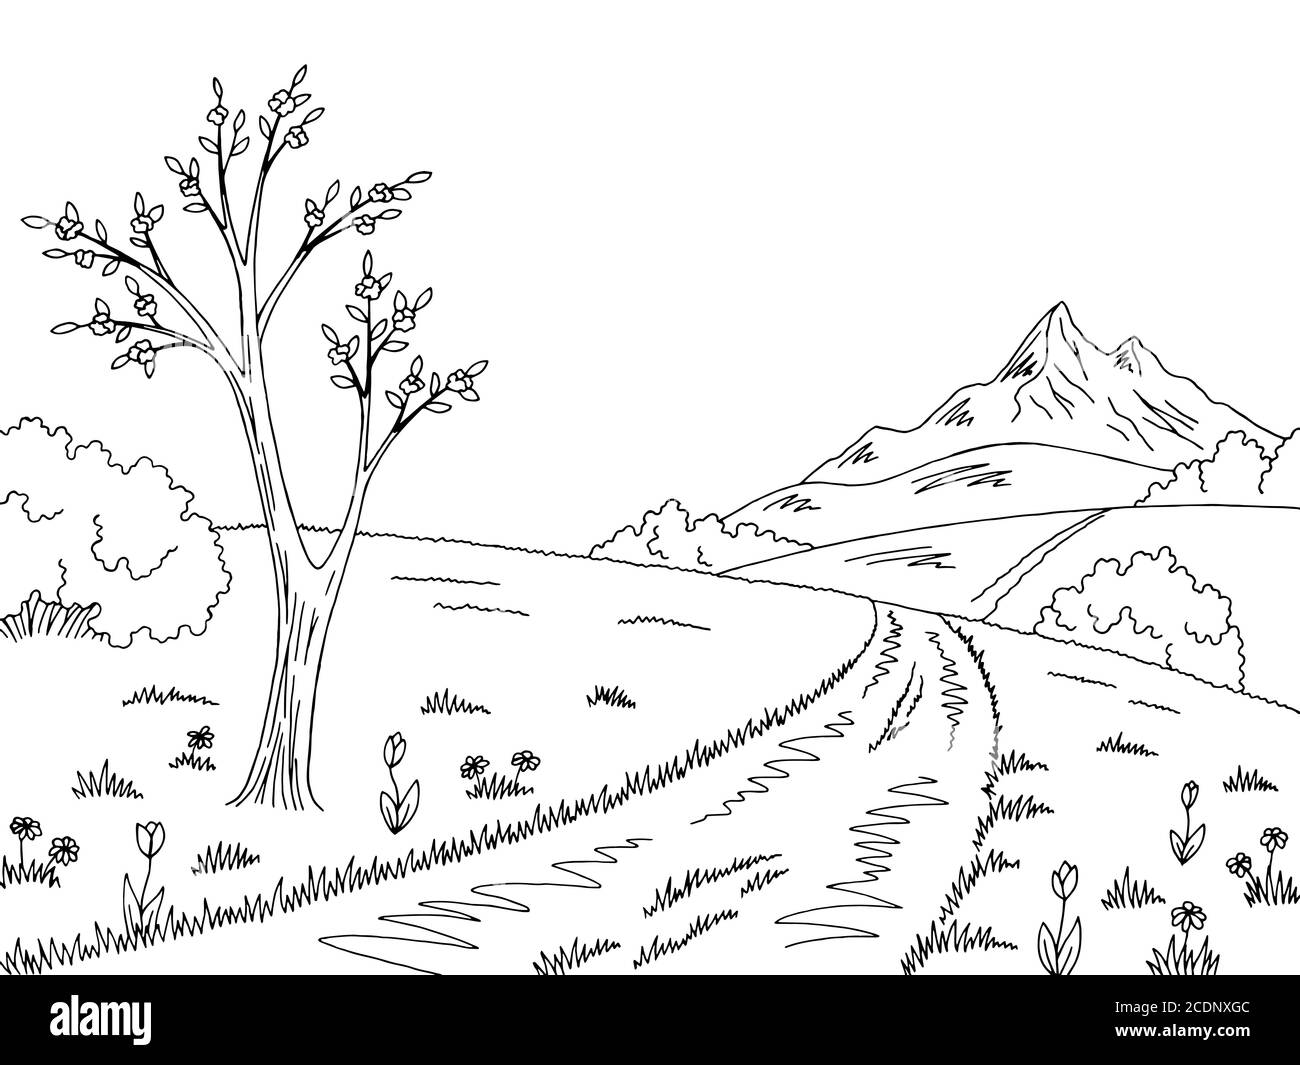 Mountain Road Grafik schwarz weiß Frühling Landschaft Skizze Illustration Vektor Stock Vektor